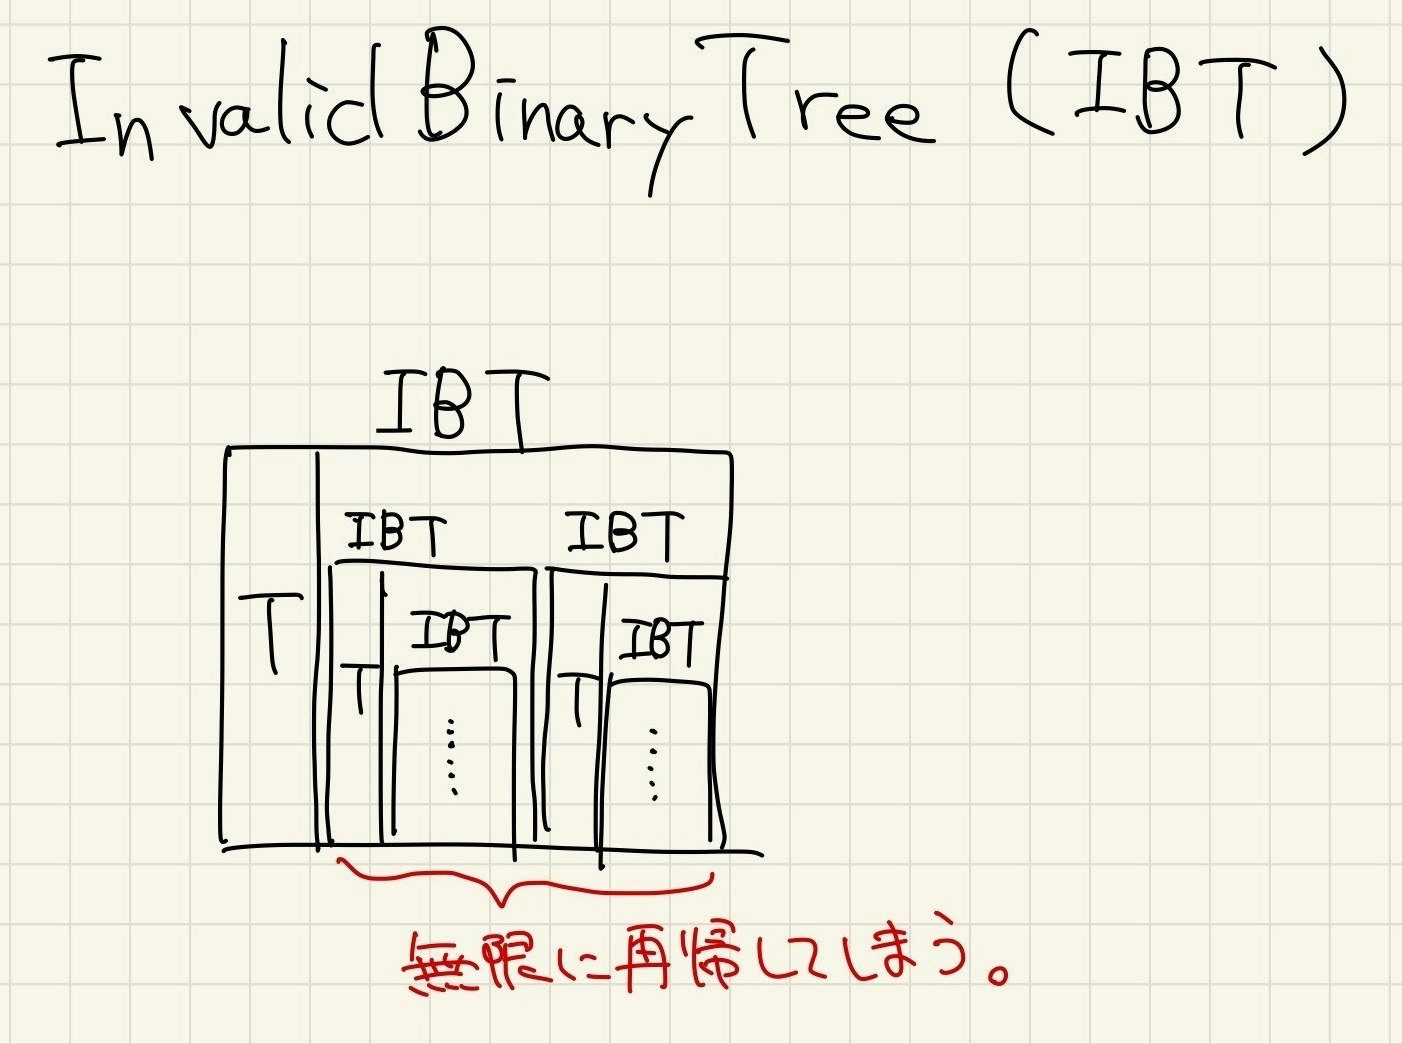 invalid_binary_tree.jpg